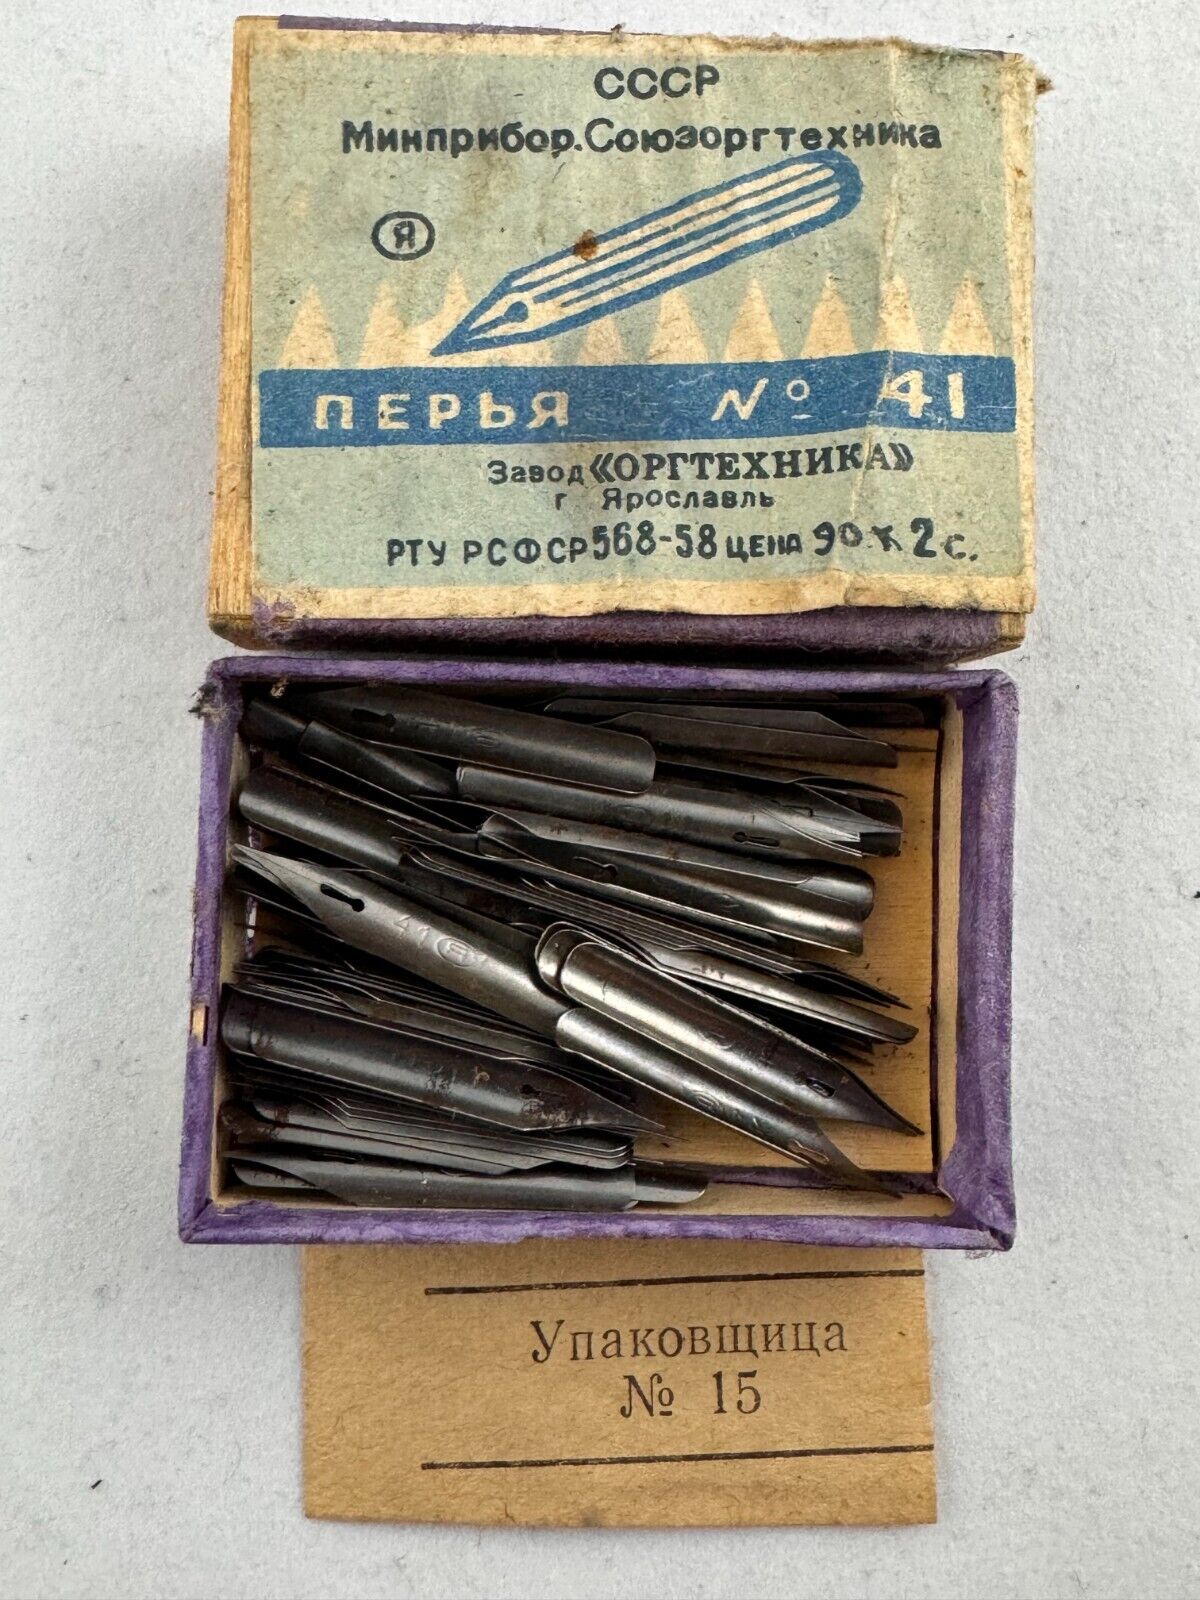 Feathers Metallic in original packaging Soviet Vintage USSR 1960s vintage, rare